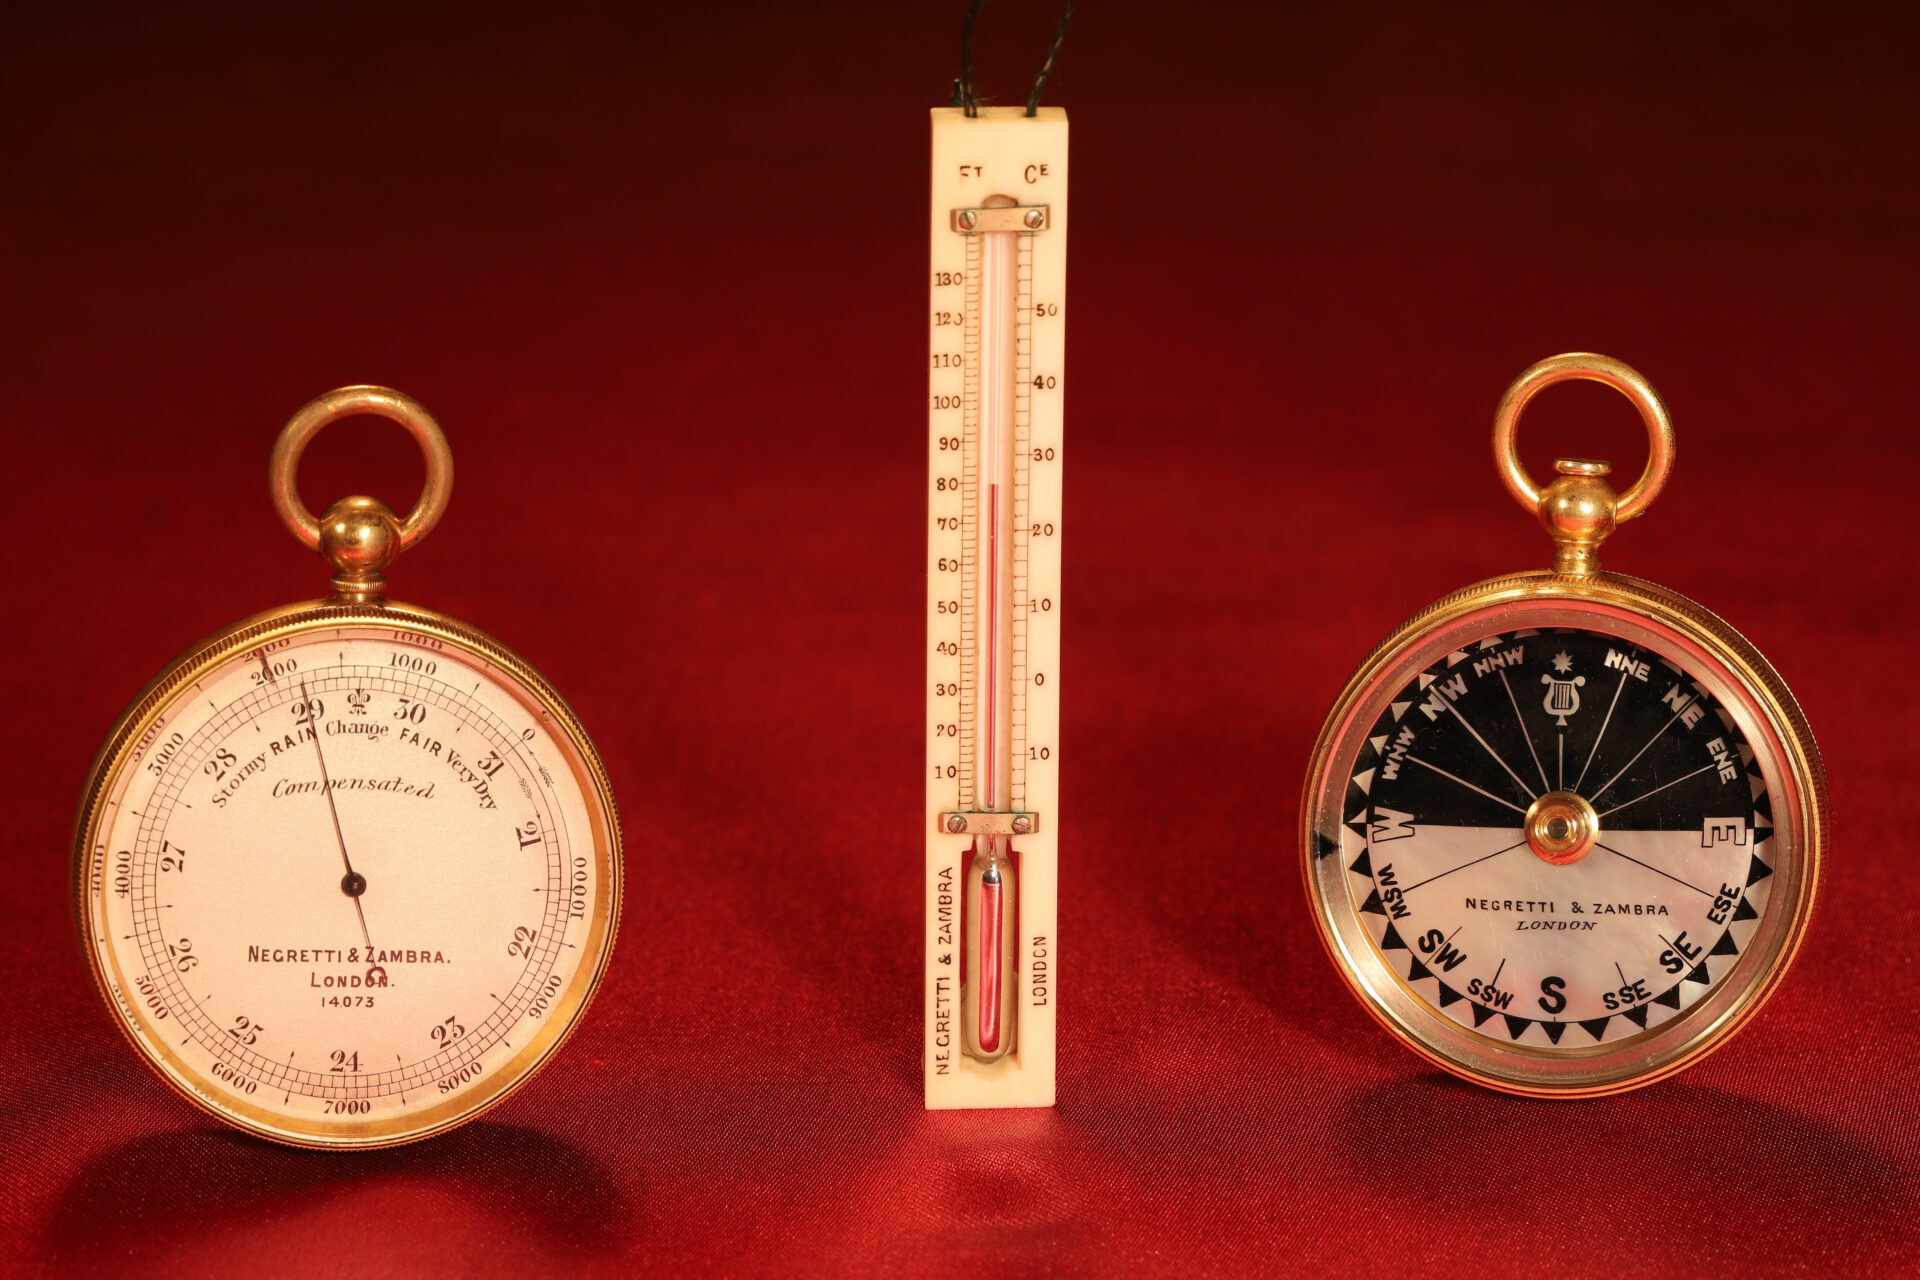 Image of pocket barometer, compass and thermometer from Negretti & Zambra Compendium Pocket Barometer Compendium No 14073 c1890